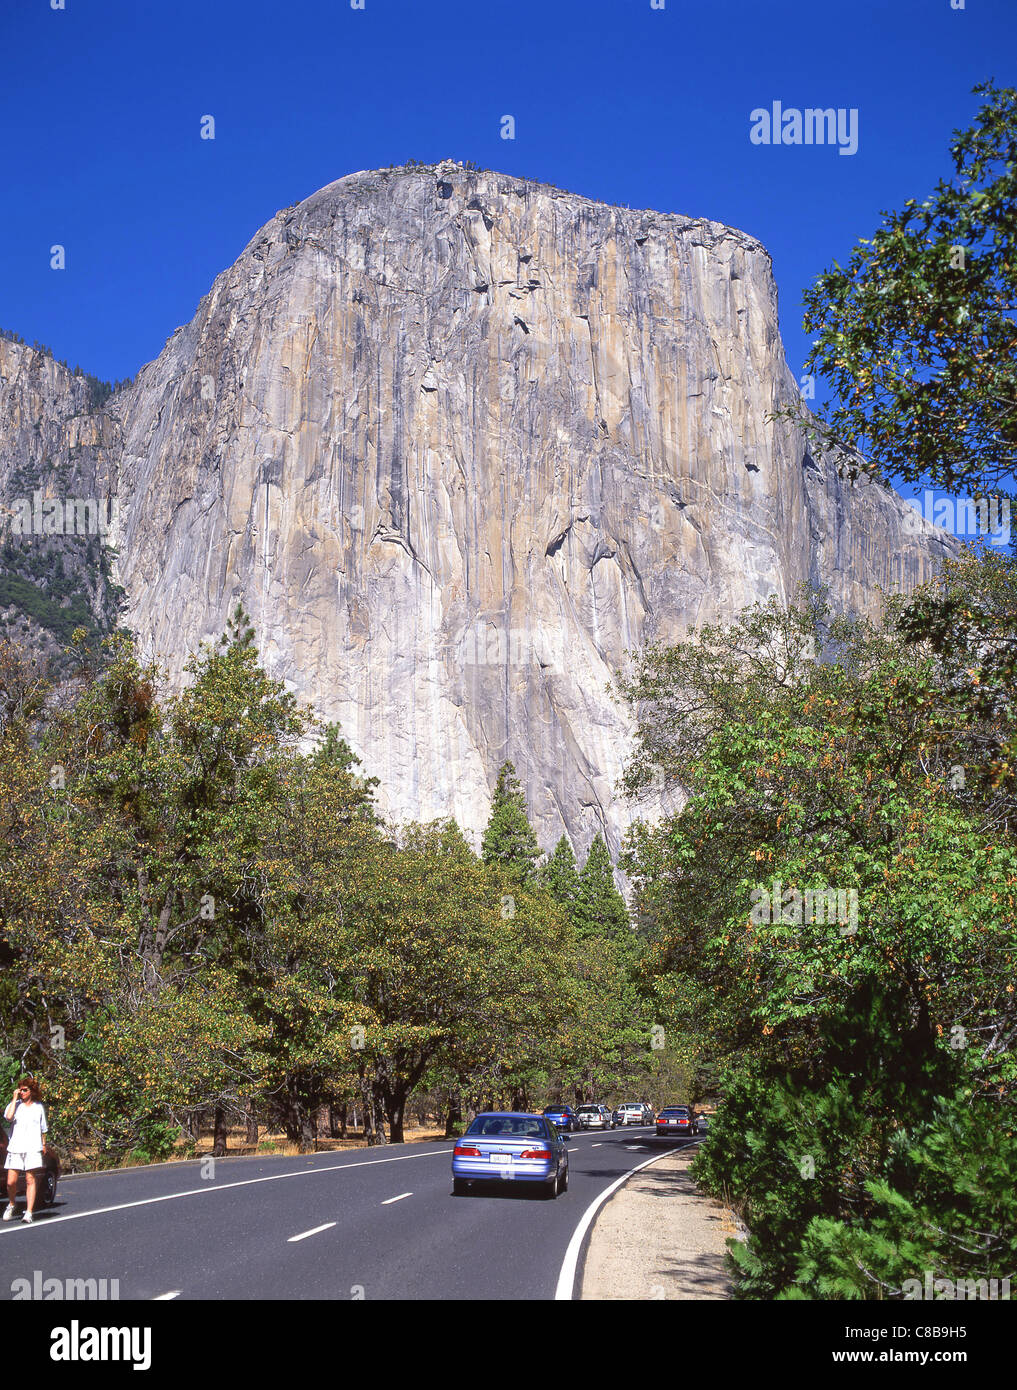 El Capitan Vista Drive, Yosemite National Park, California, United States of America Banque D'Images